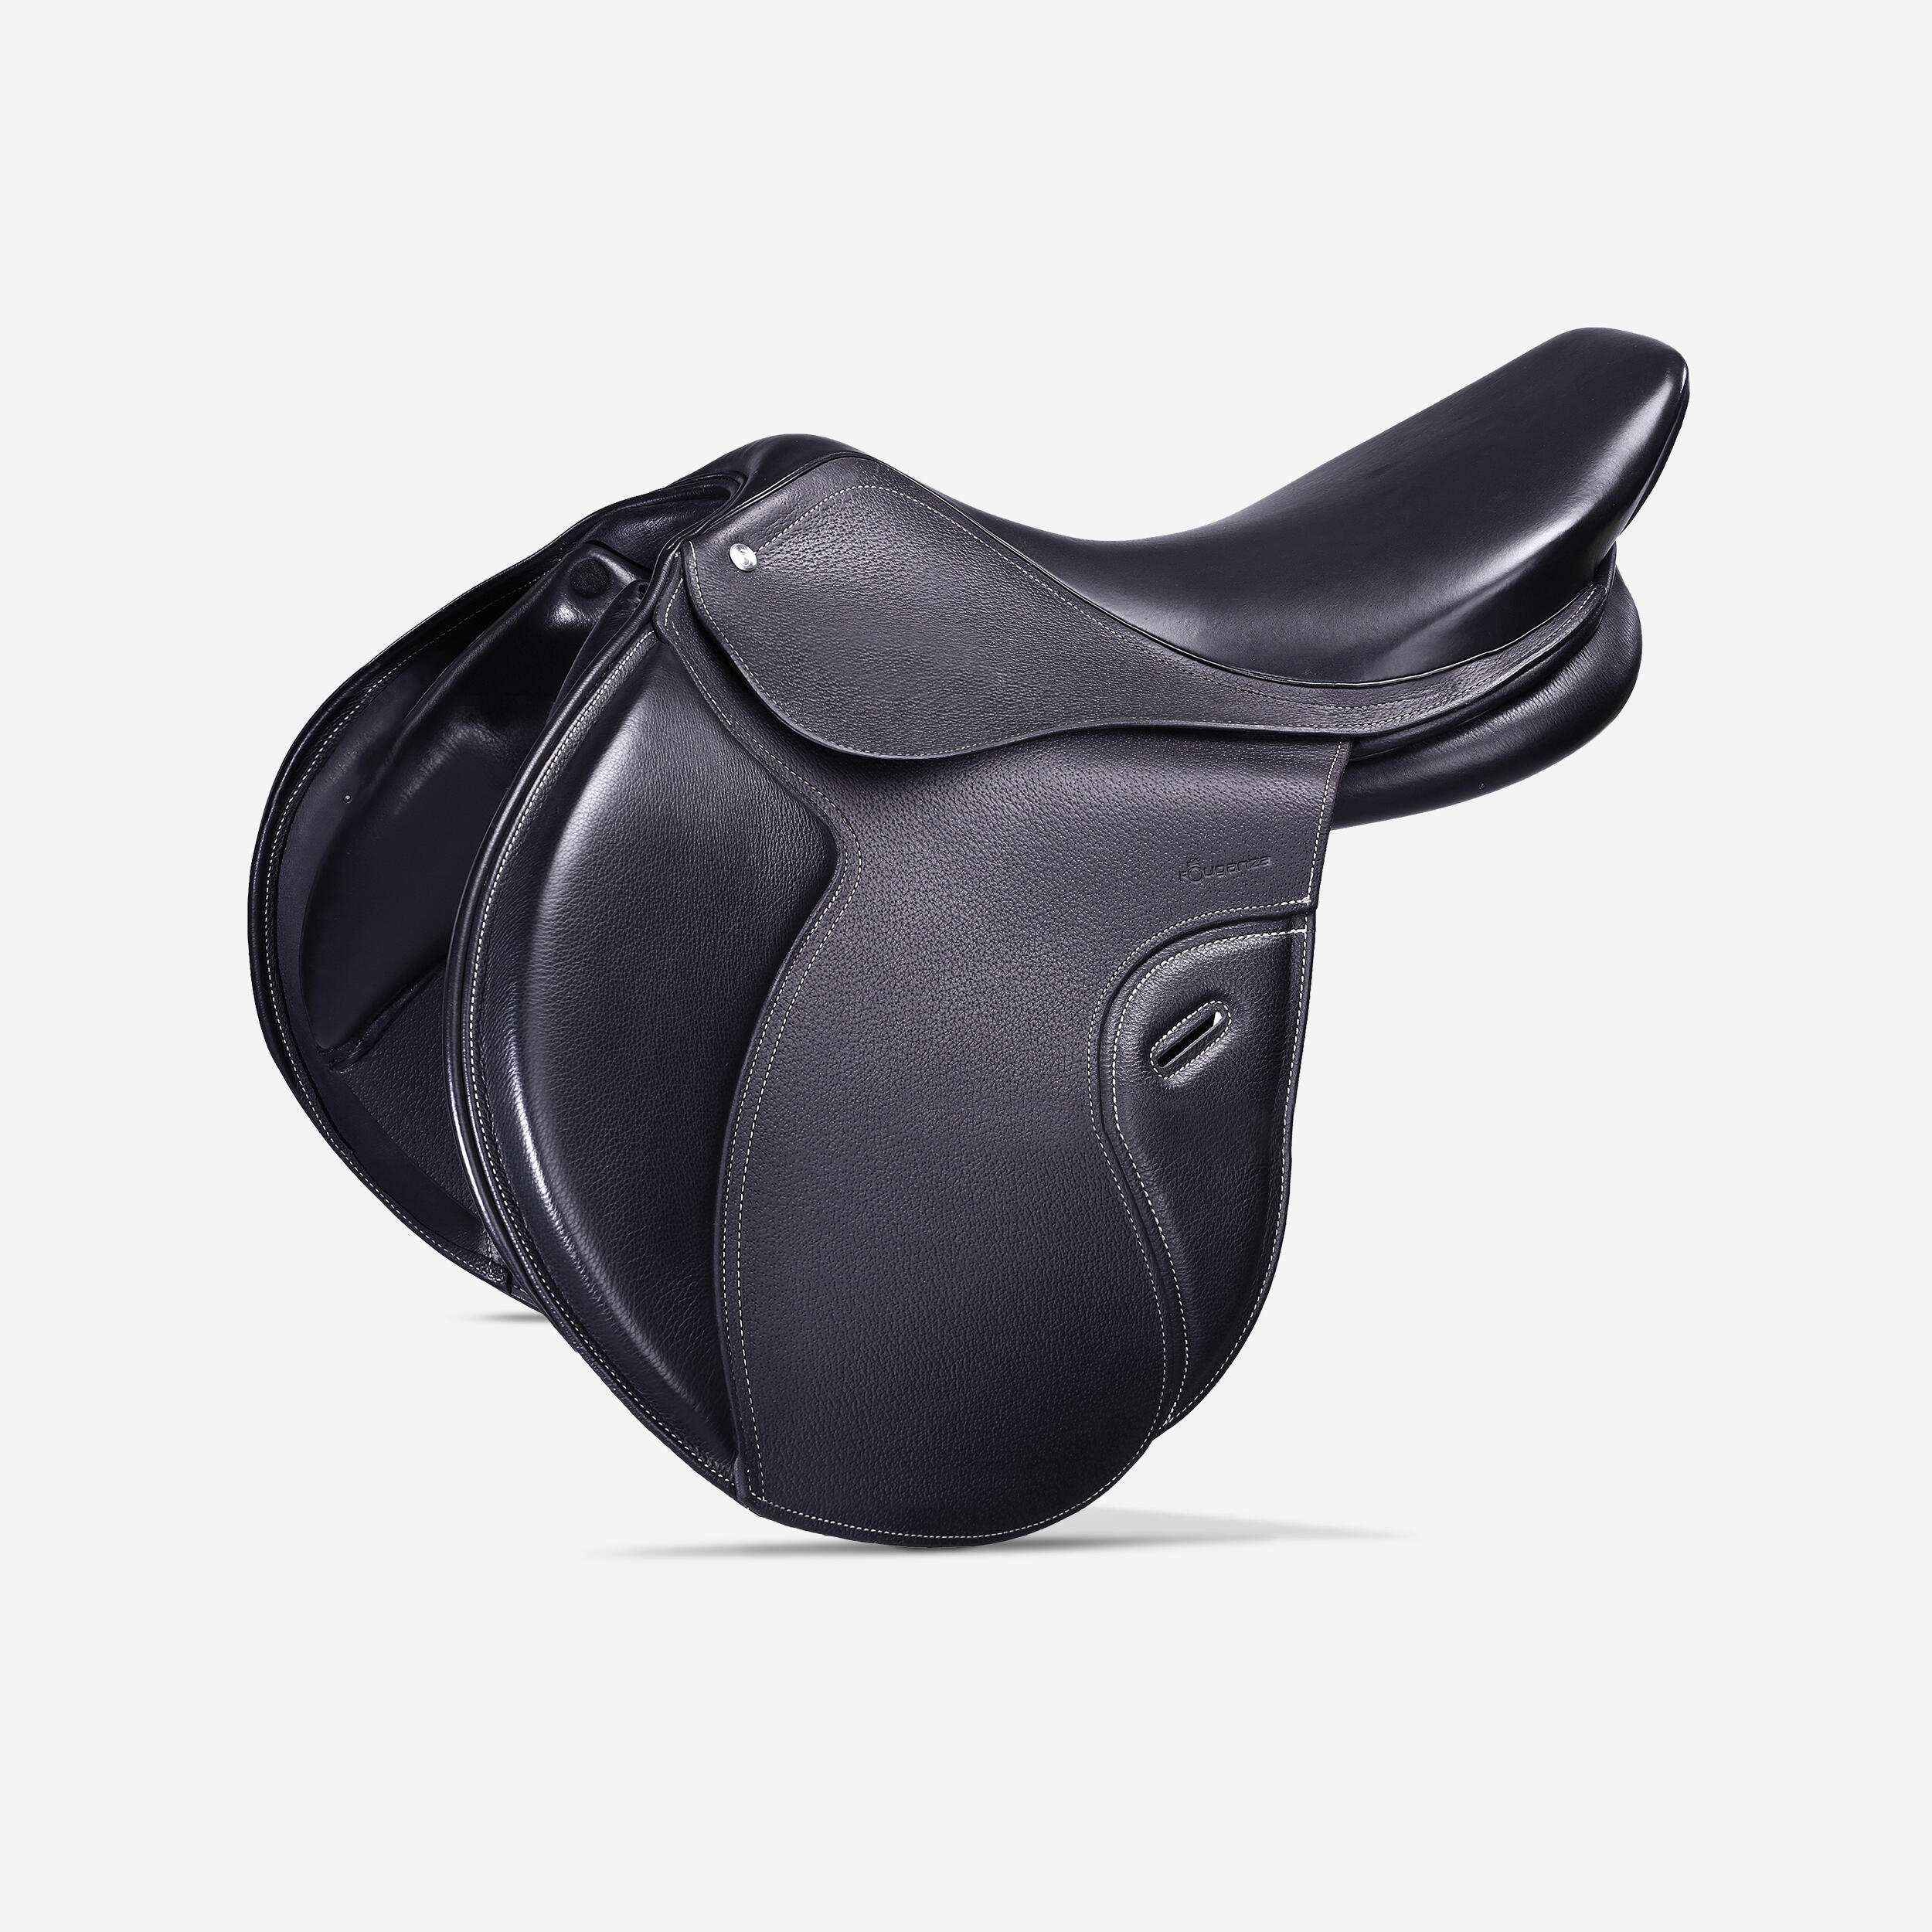 17.5" Versatile Leather Horse Riding Saddle for Horse Paddock - Black 1/15